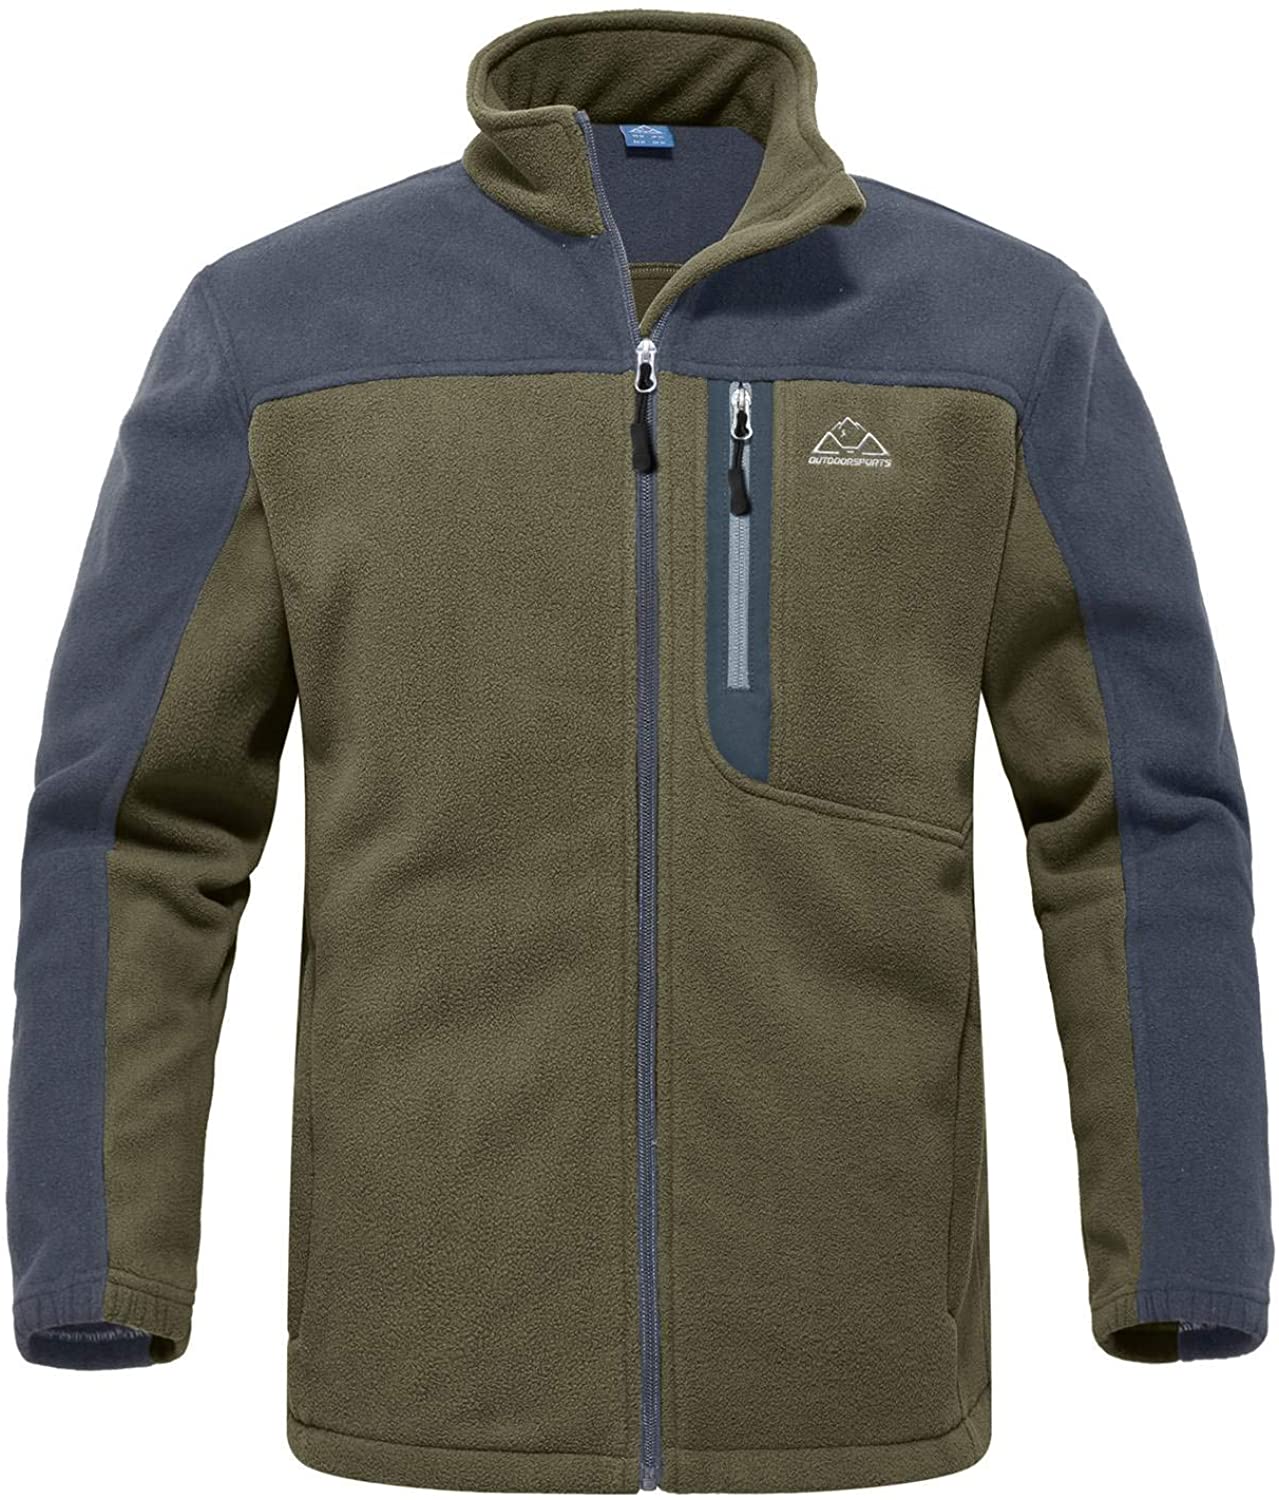 Rdruko Men's Softshell Jacket Fleece Windproof Lightweight Outdoor Jackets Full Zip Hiking Work Outwear 